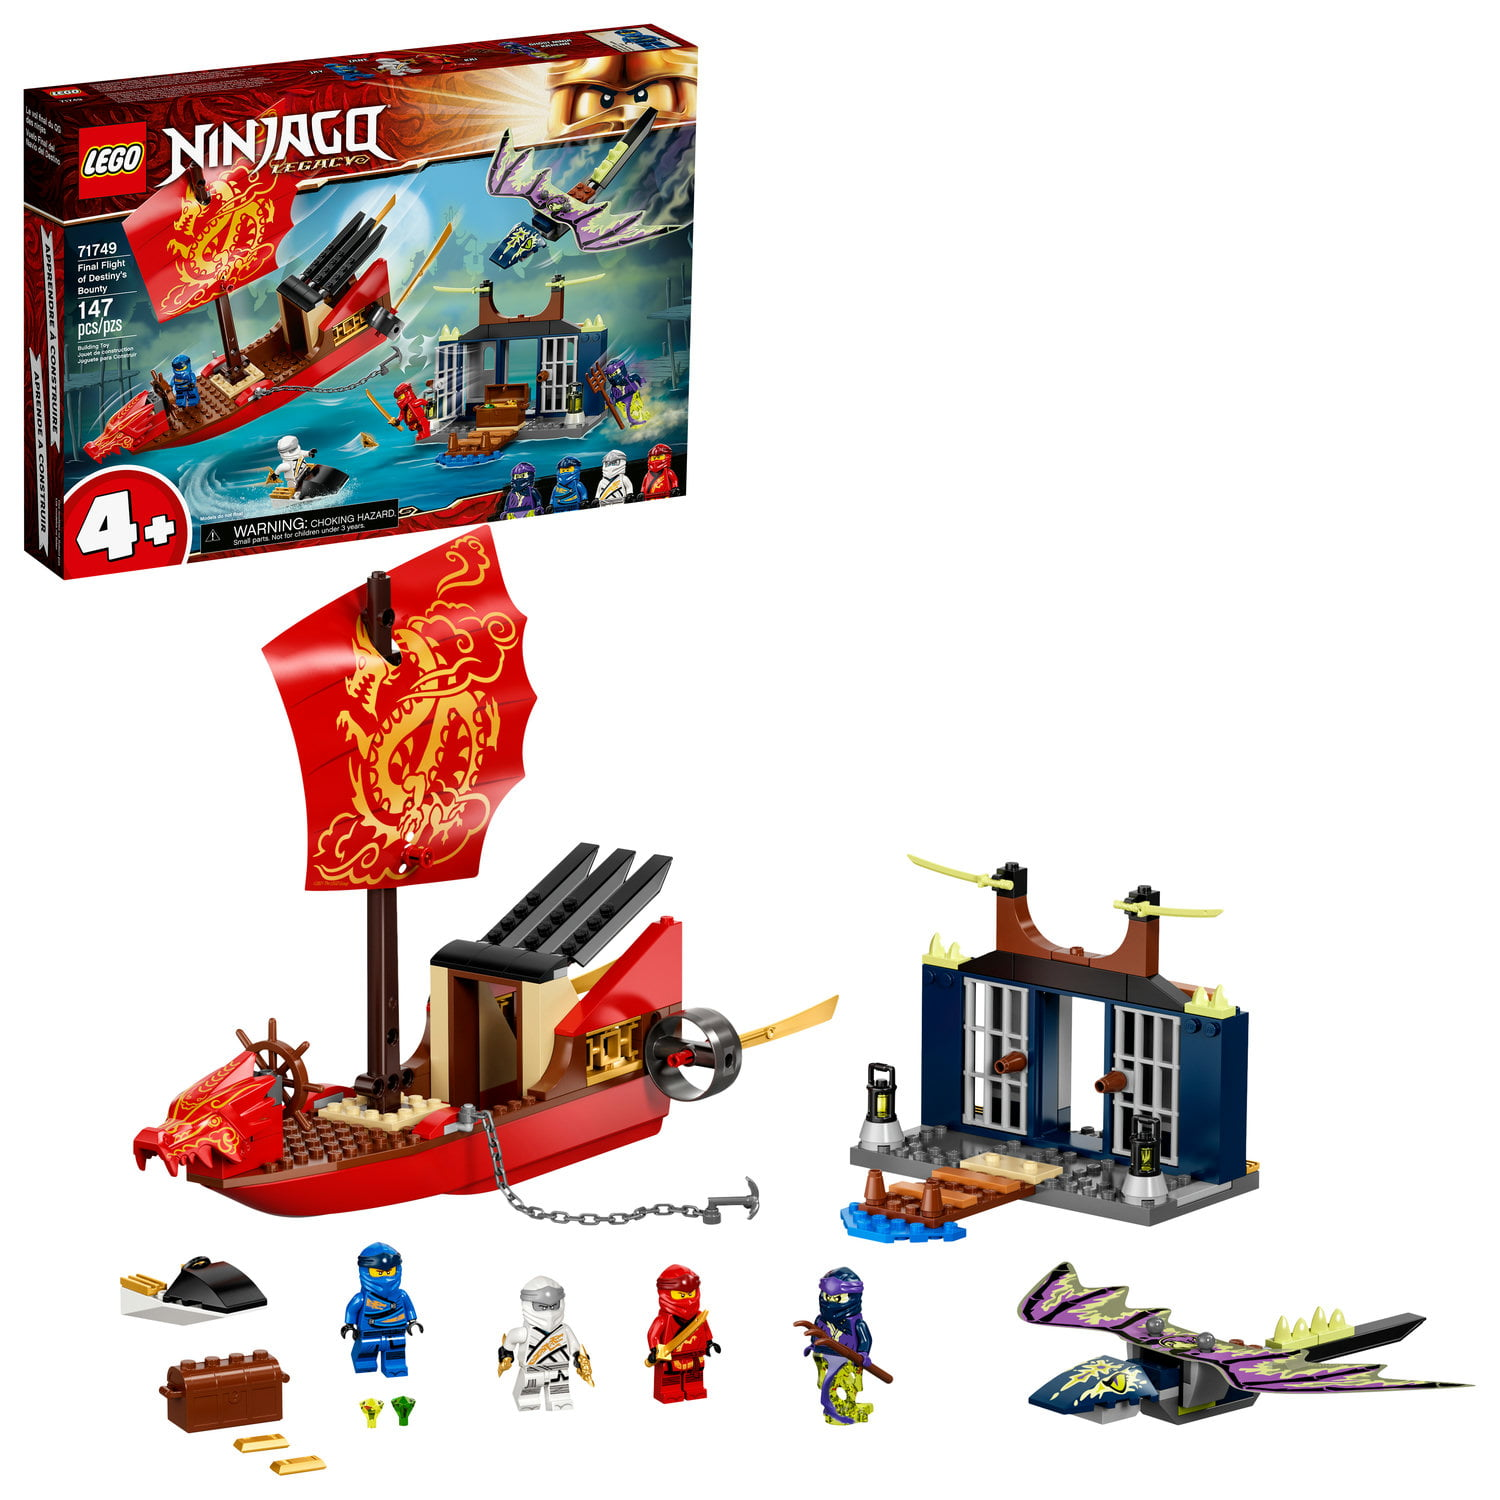 LEGO NINJAGO Legacy Final Flight of Destiny’s Bounty 71749 Building Toy (147 Pieces) - Walmart.com $29.99